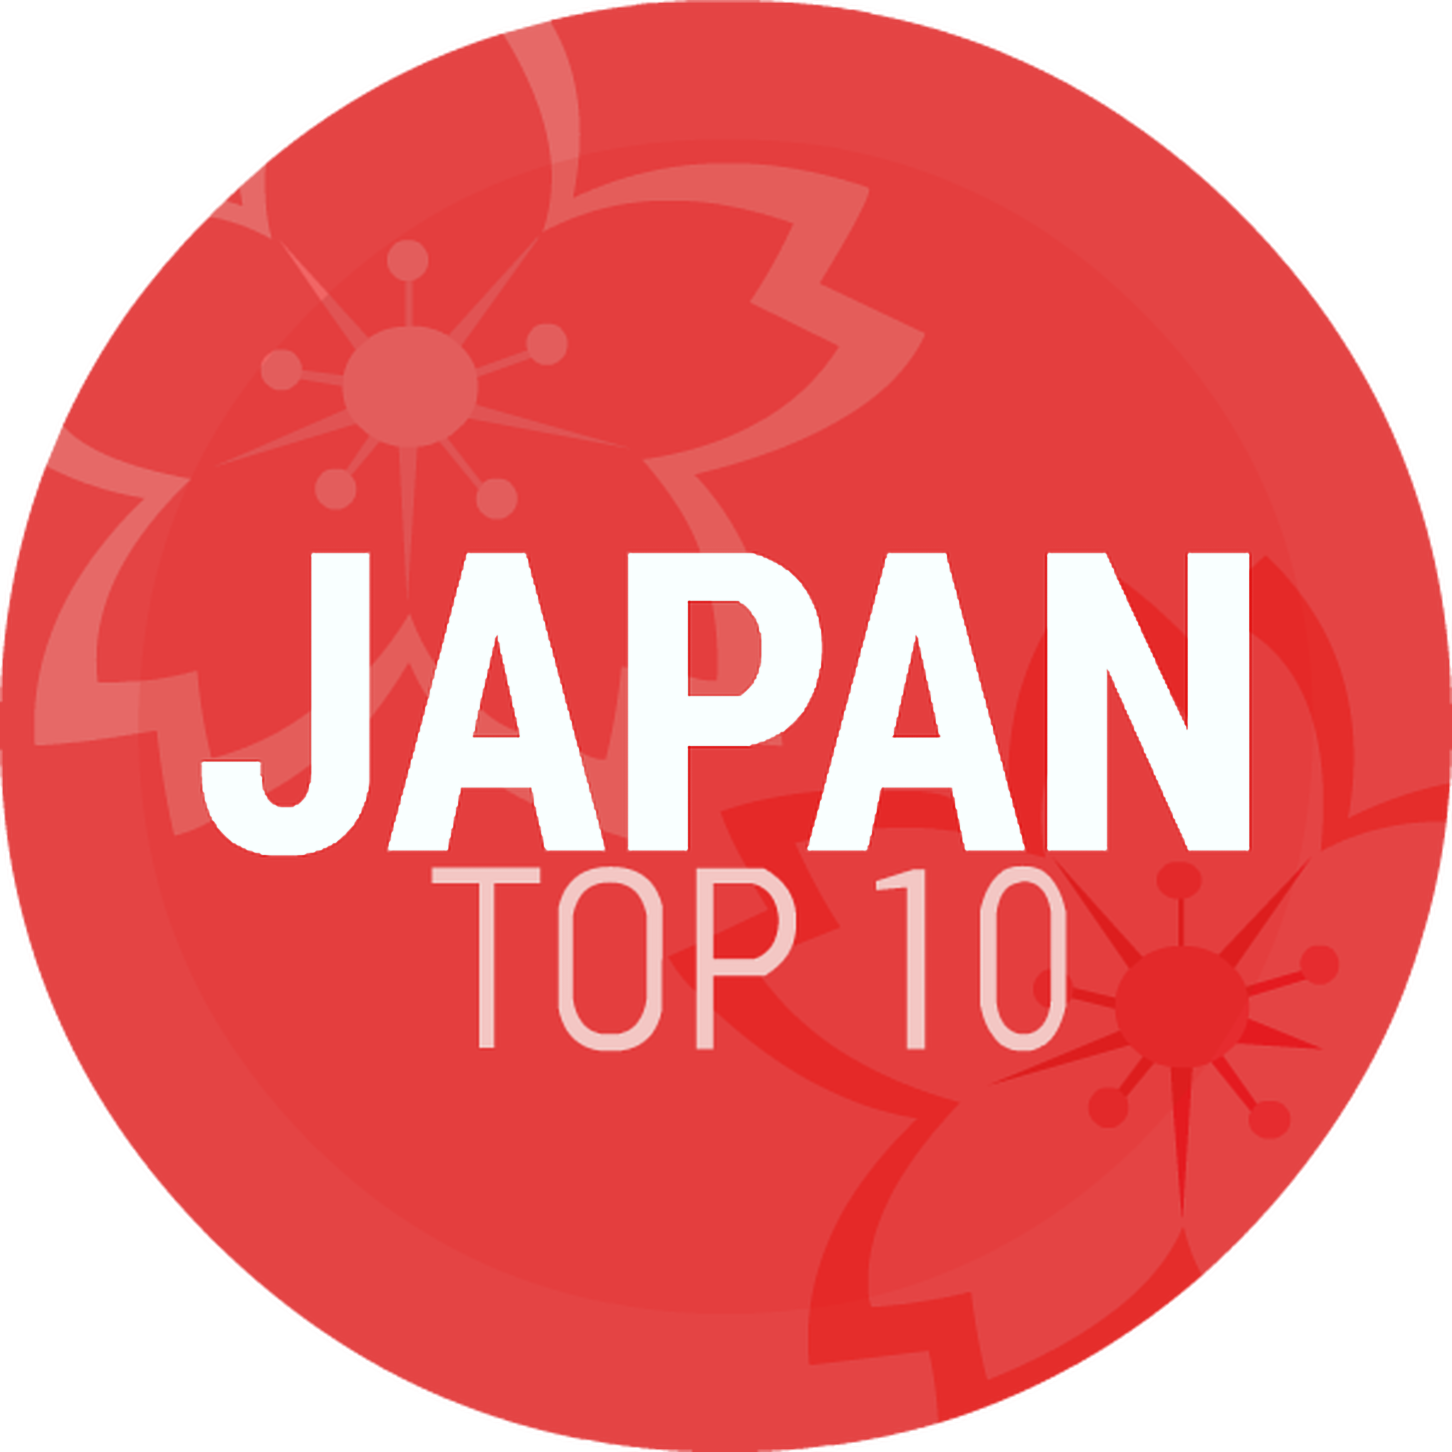 Episode 316: Japan Top 10 Cultures #10: Listen to the Anime Voice Actors (Seiyuus)